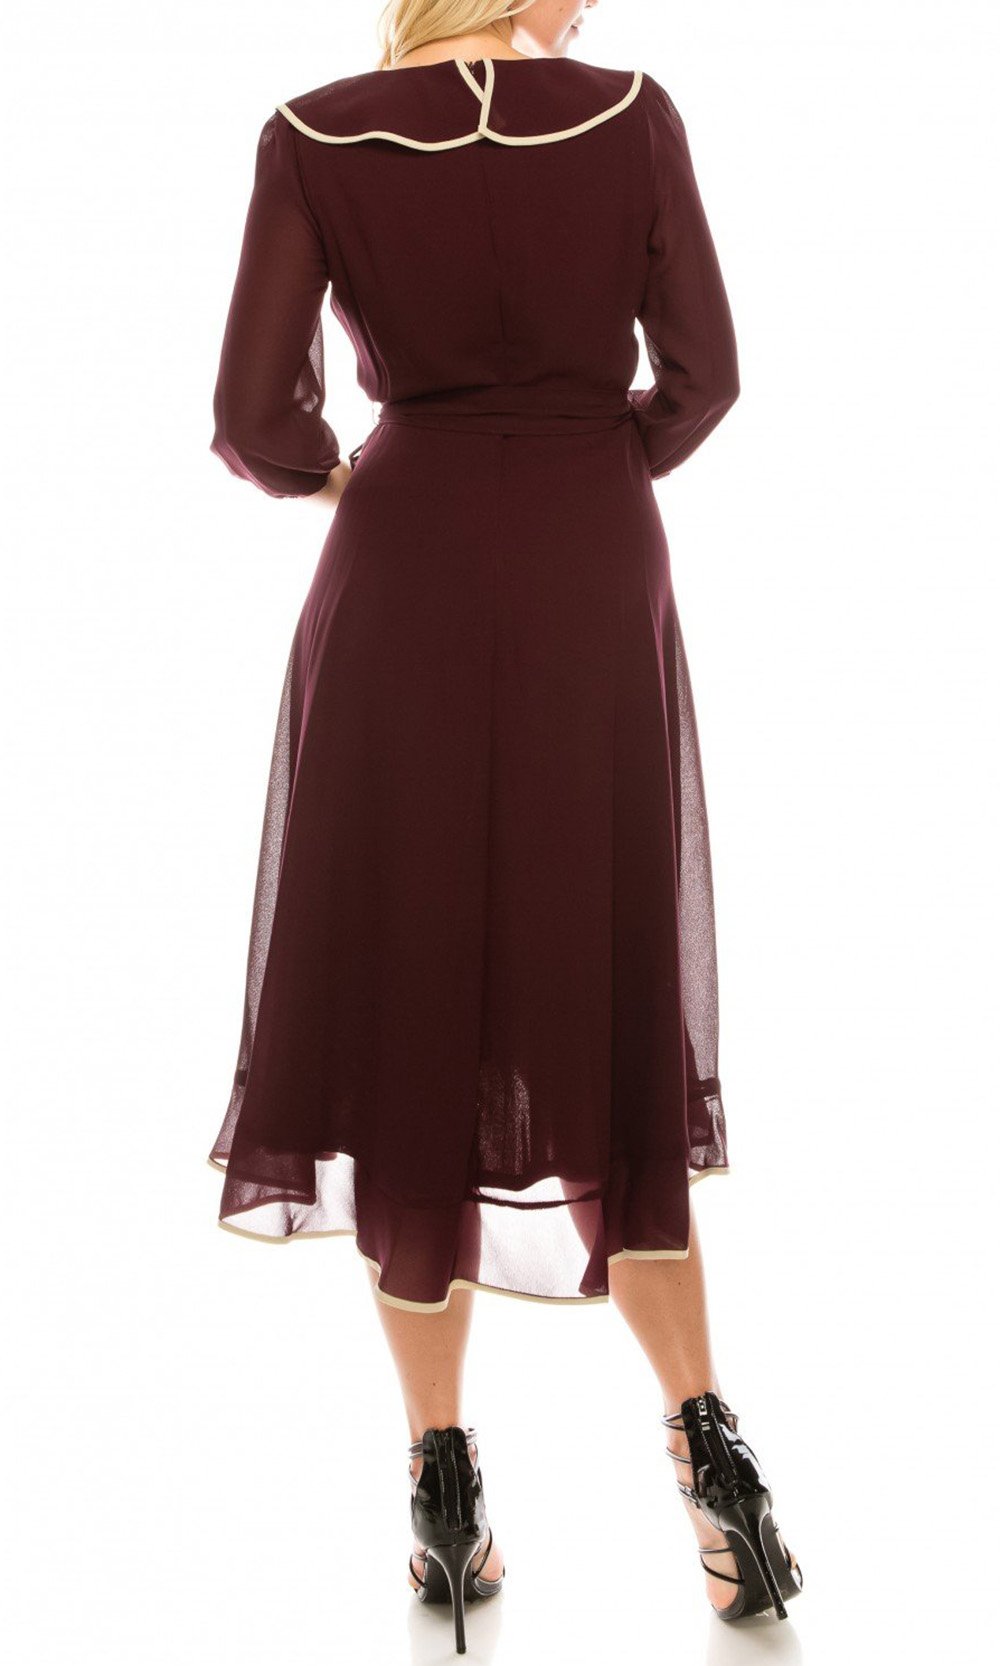 Gabby Skye - 57181MG Ruffle Contrast Trim A-Line Chiffon Dress In Brown and Red